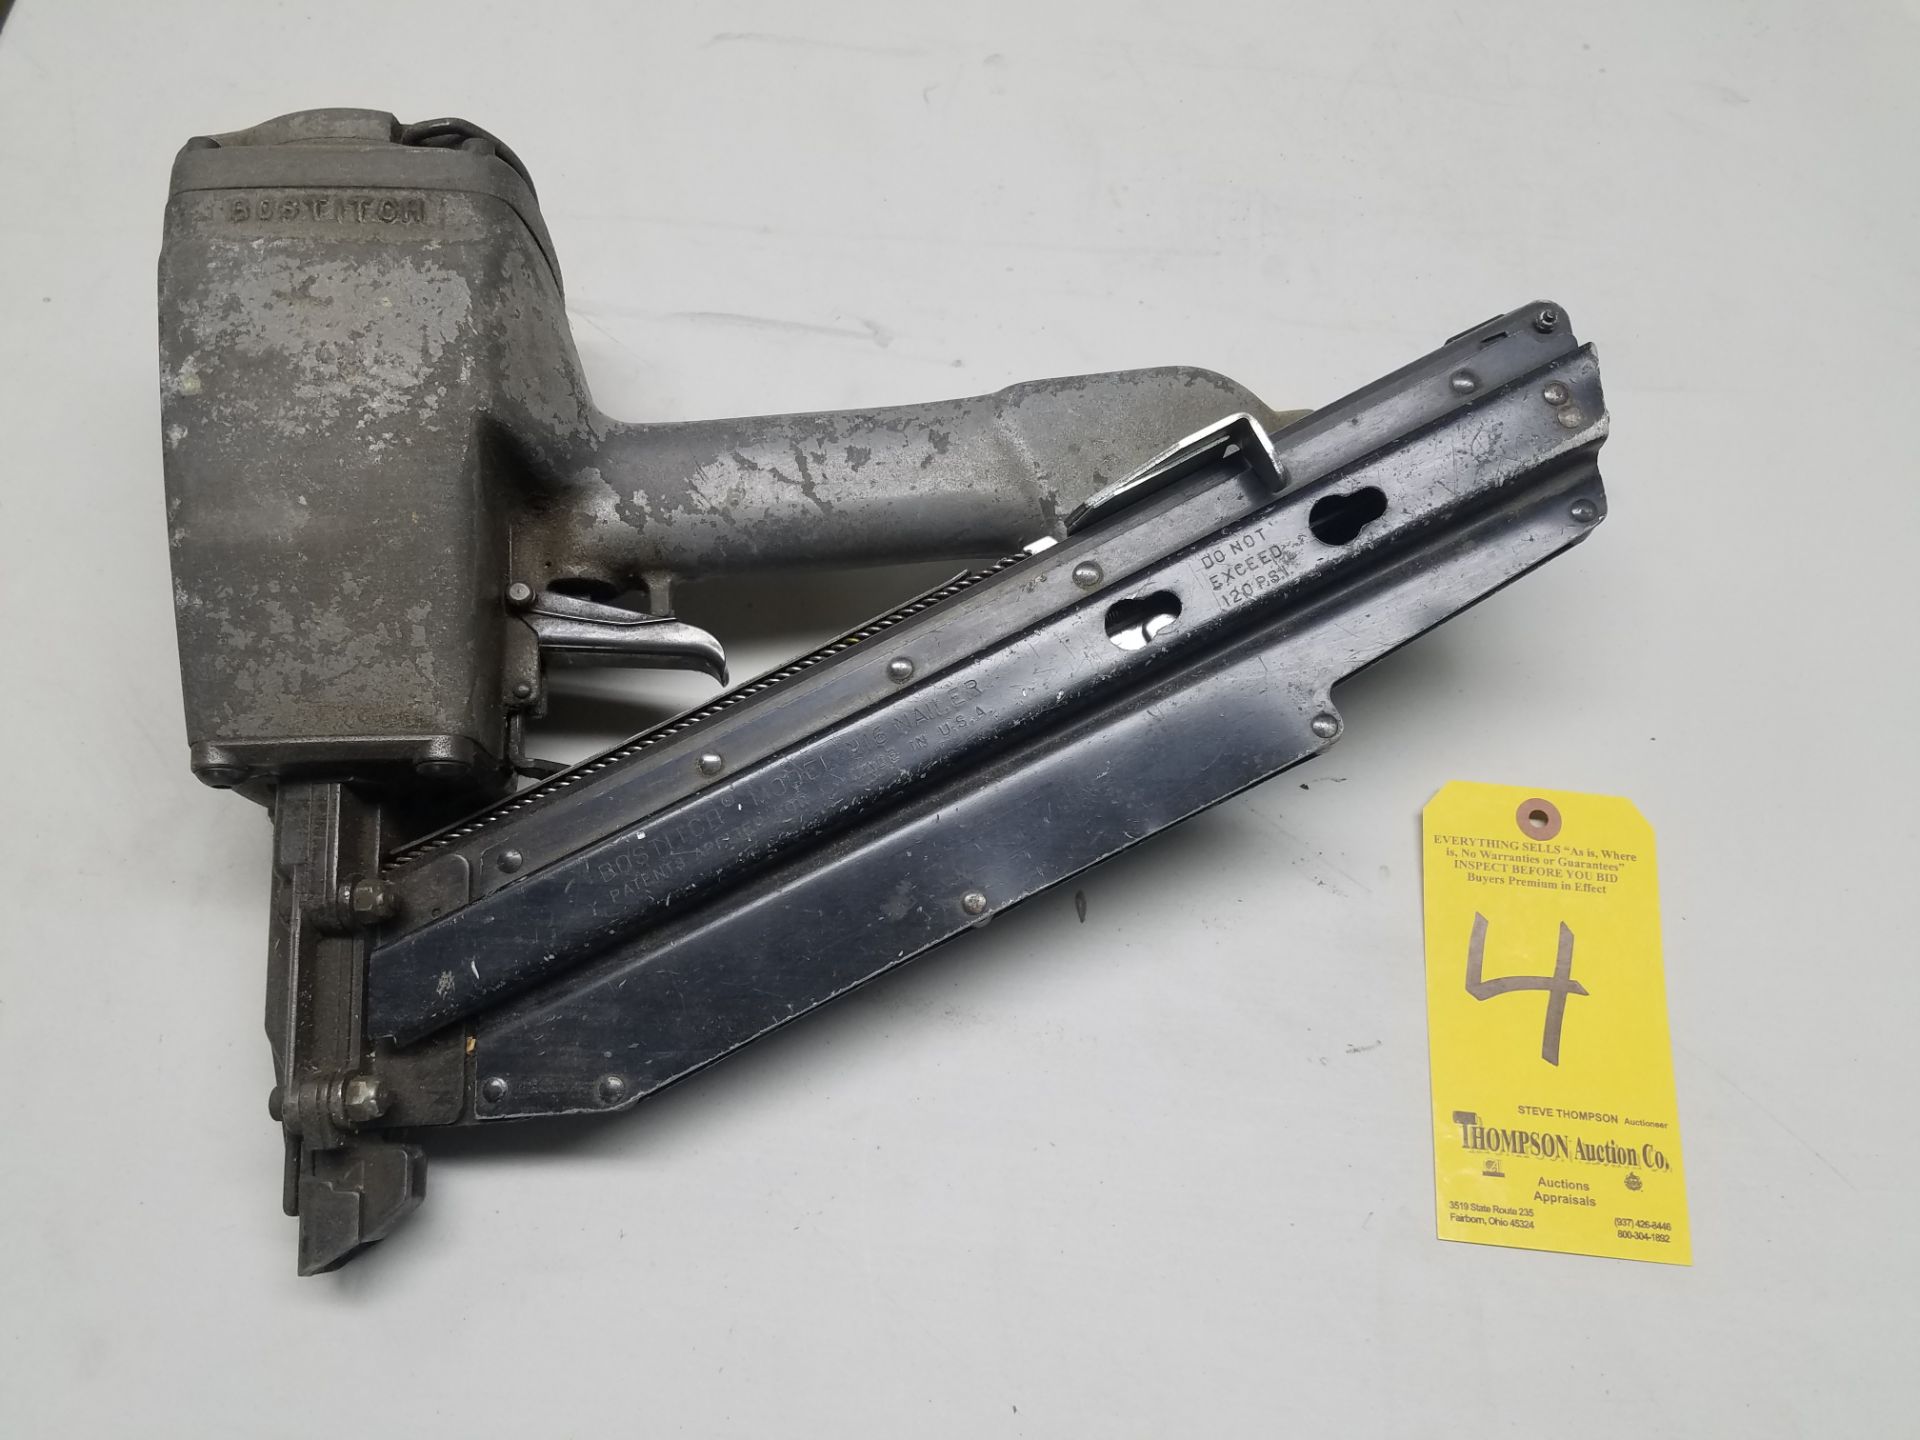 Bostitch N16 Pneumatic Nail Gun